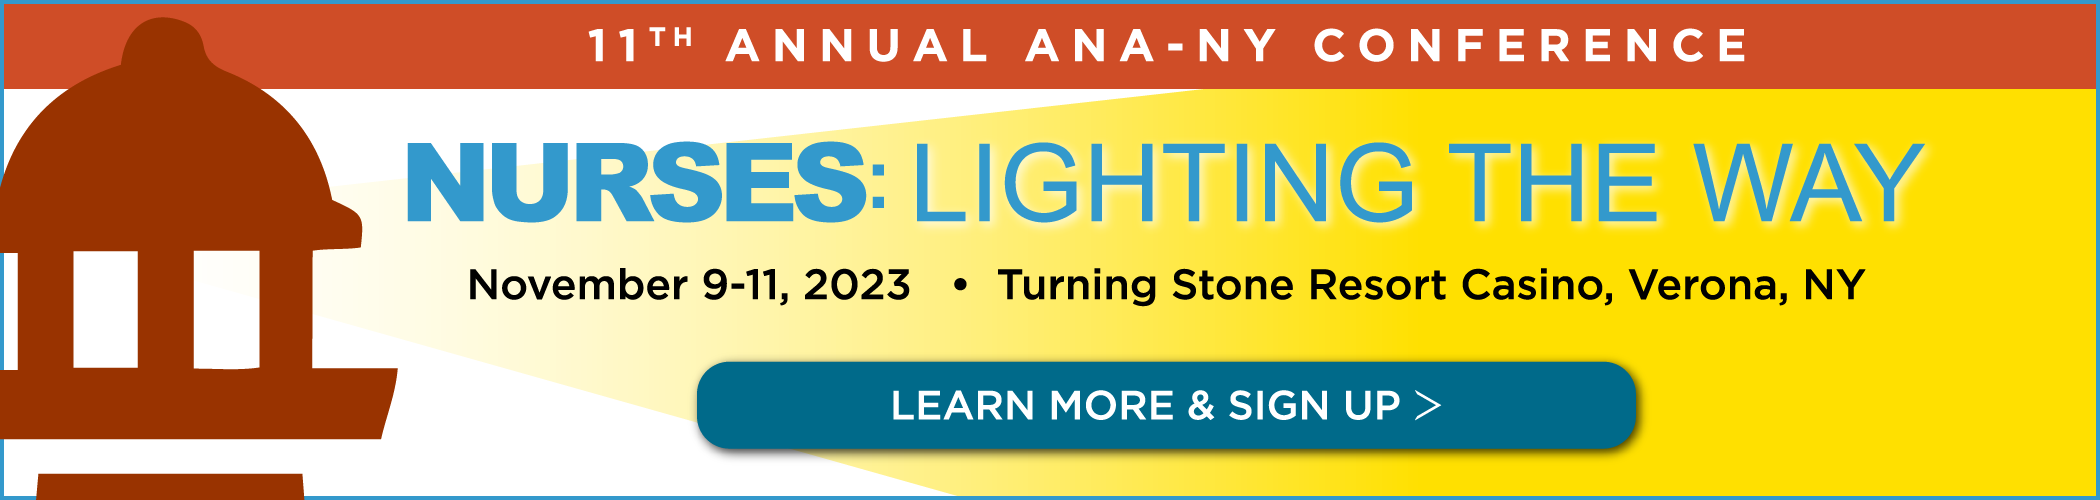 11th Annual ANA-NY Conference | Nurses: Lighting the Way | November 9-11, 2023 | Turning Stone Resort Casino, Verona, NY | Learn More and Sign Up >